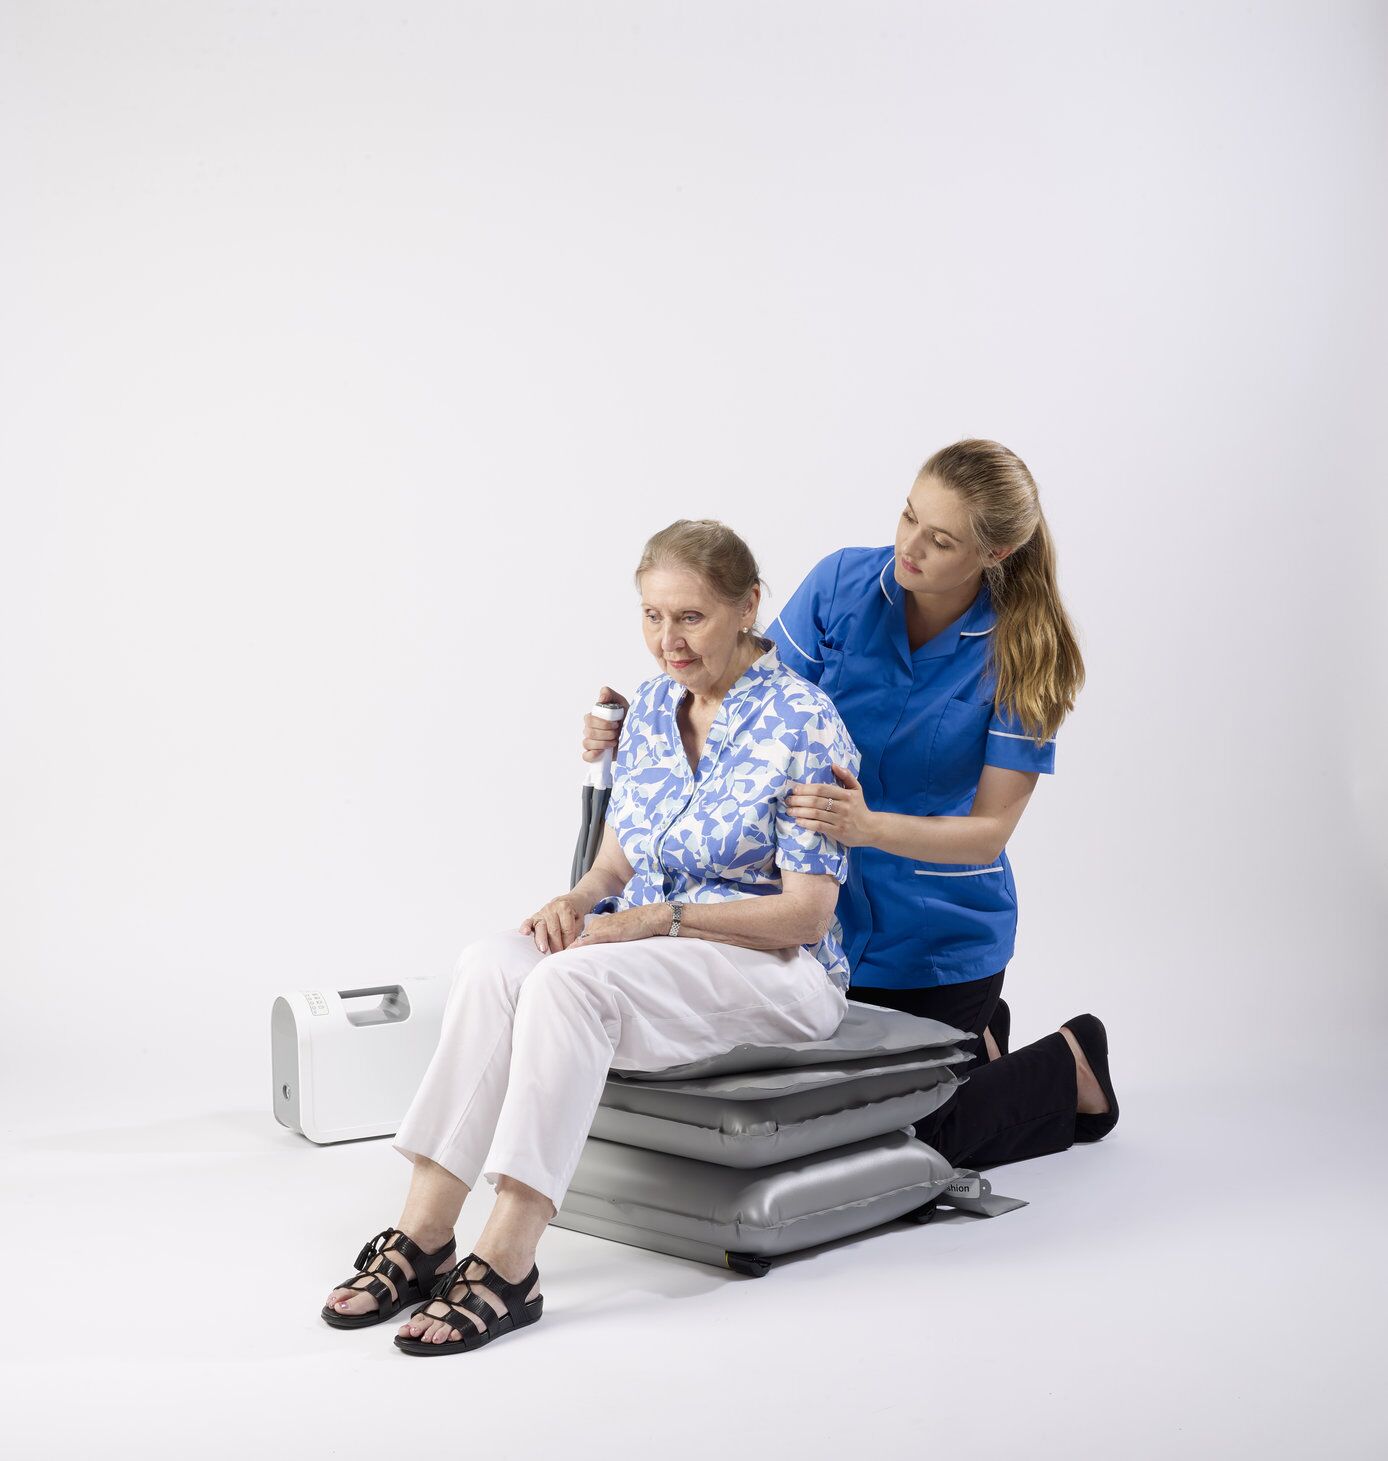 Seat Boost Electric Lifting Cushion : premium powered lift seat